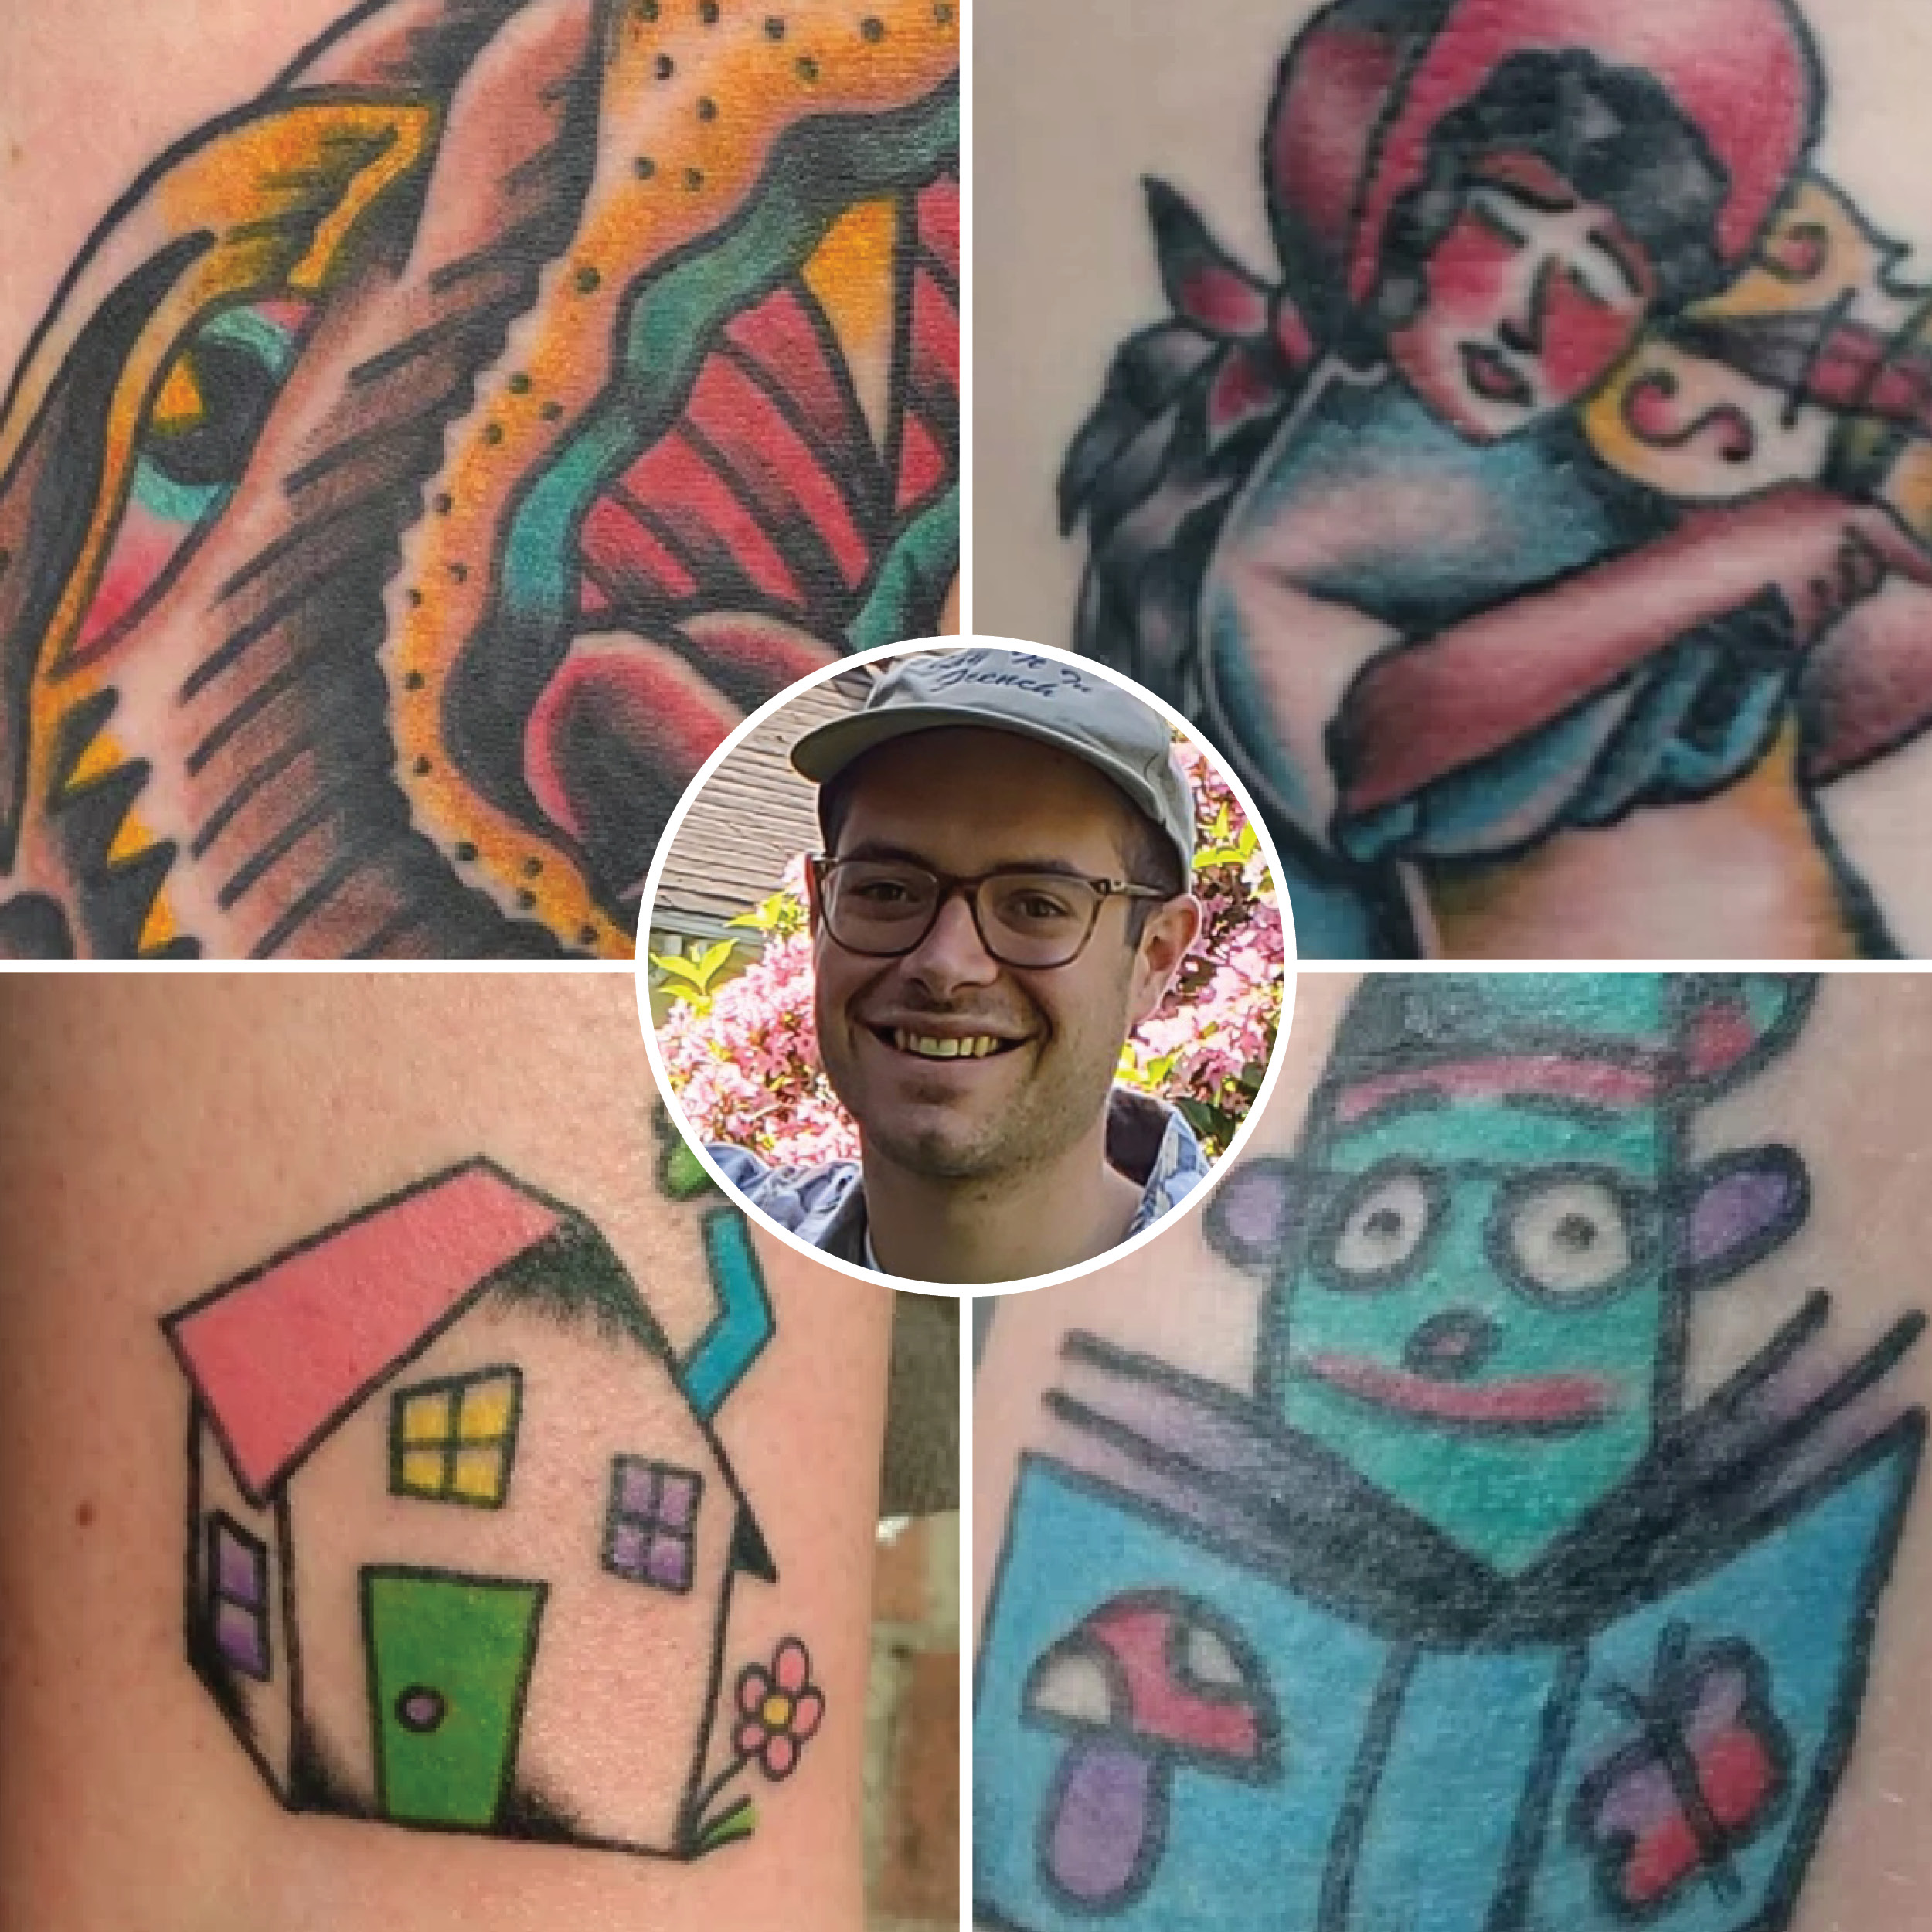 Image of man in hat; work samples of tattoos